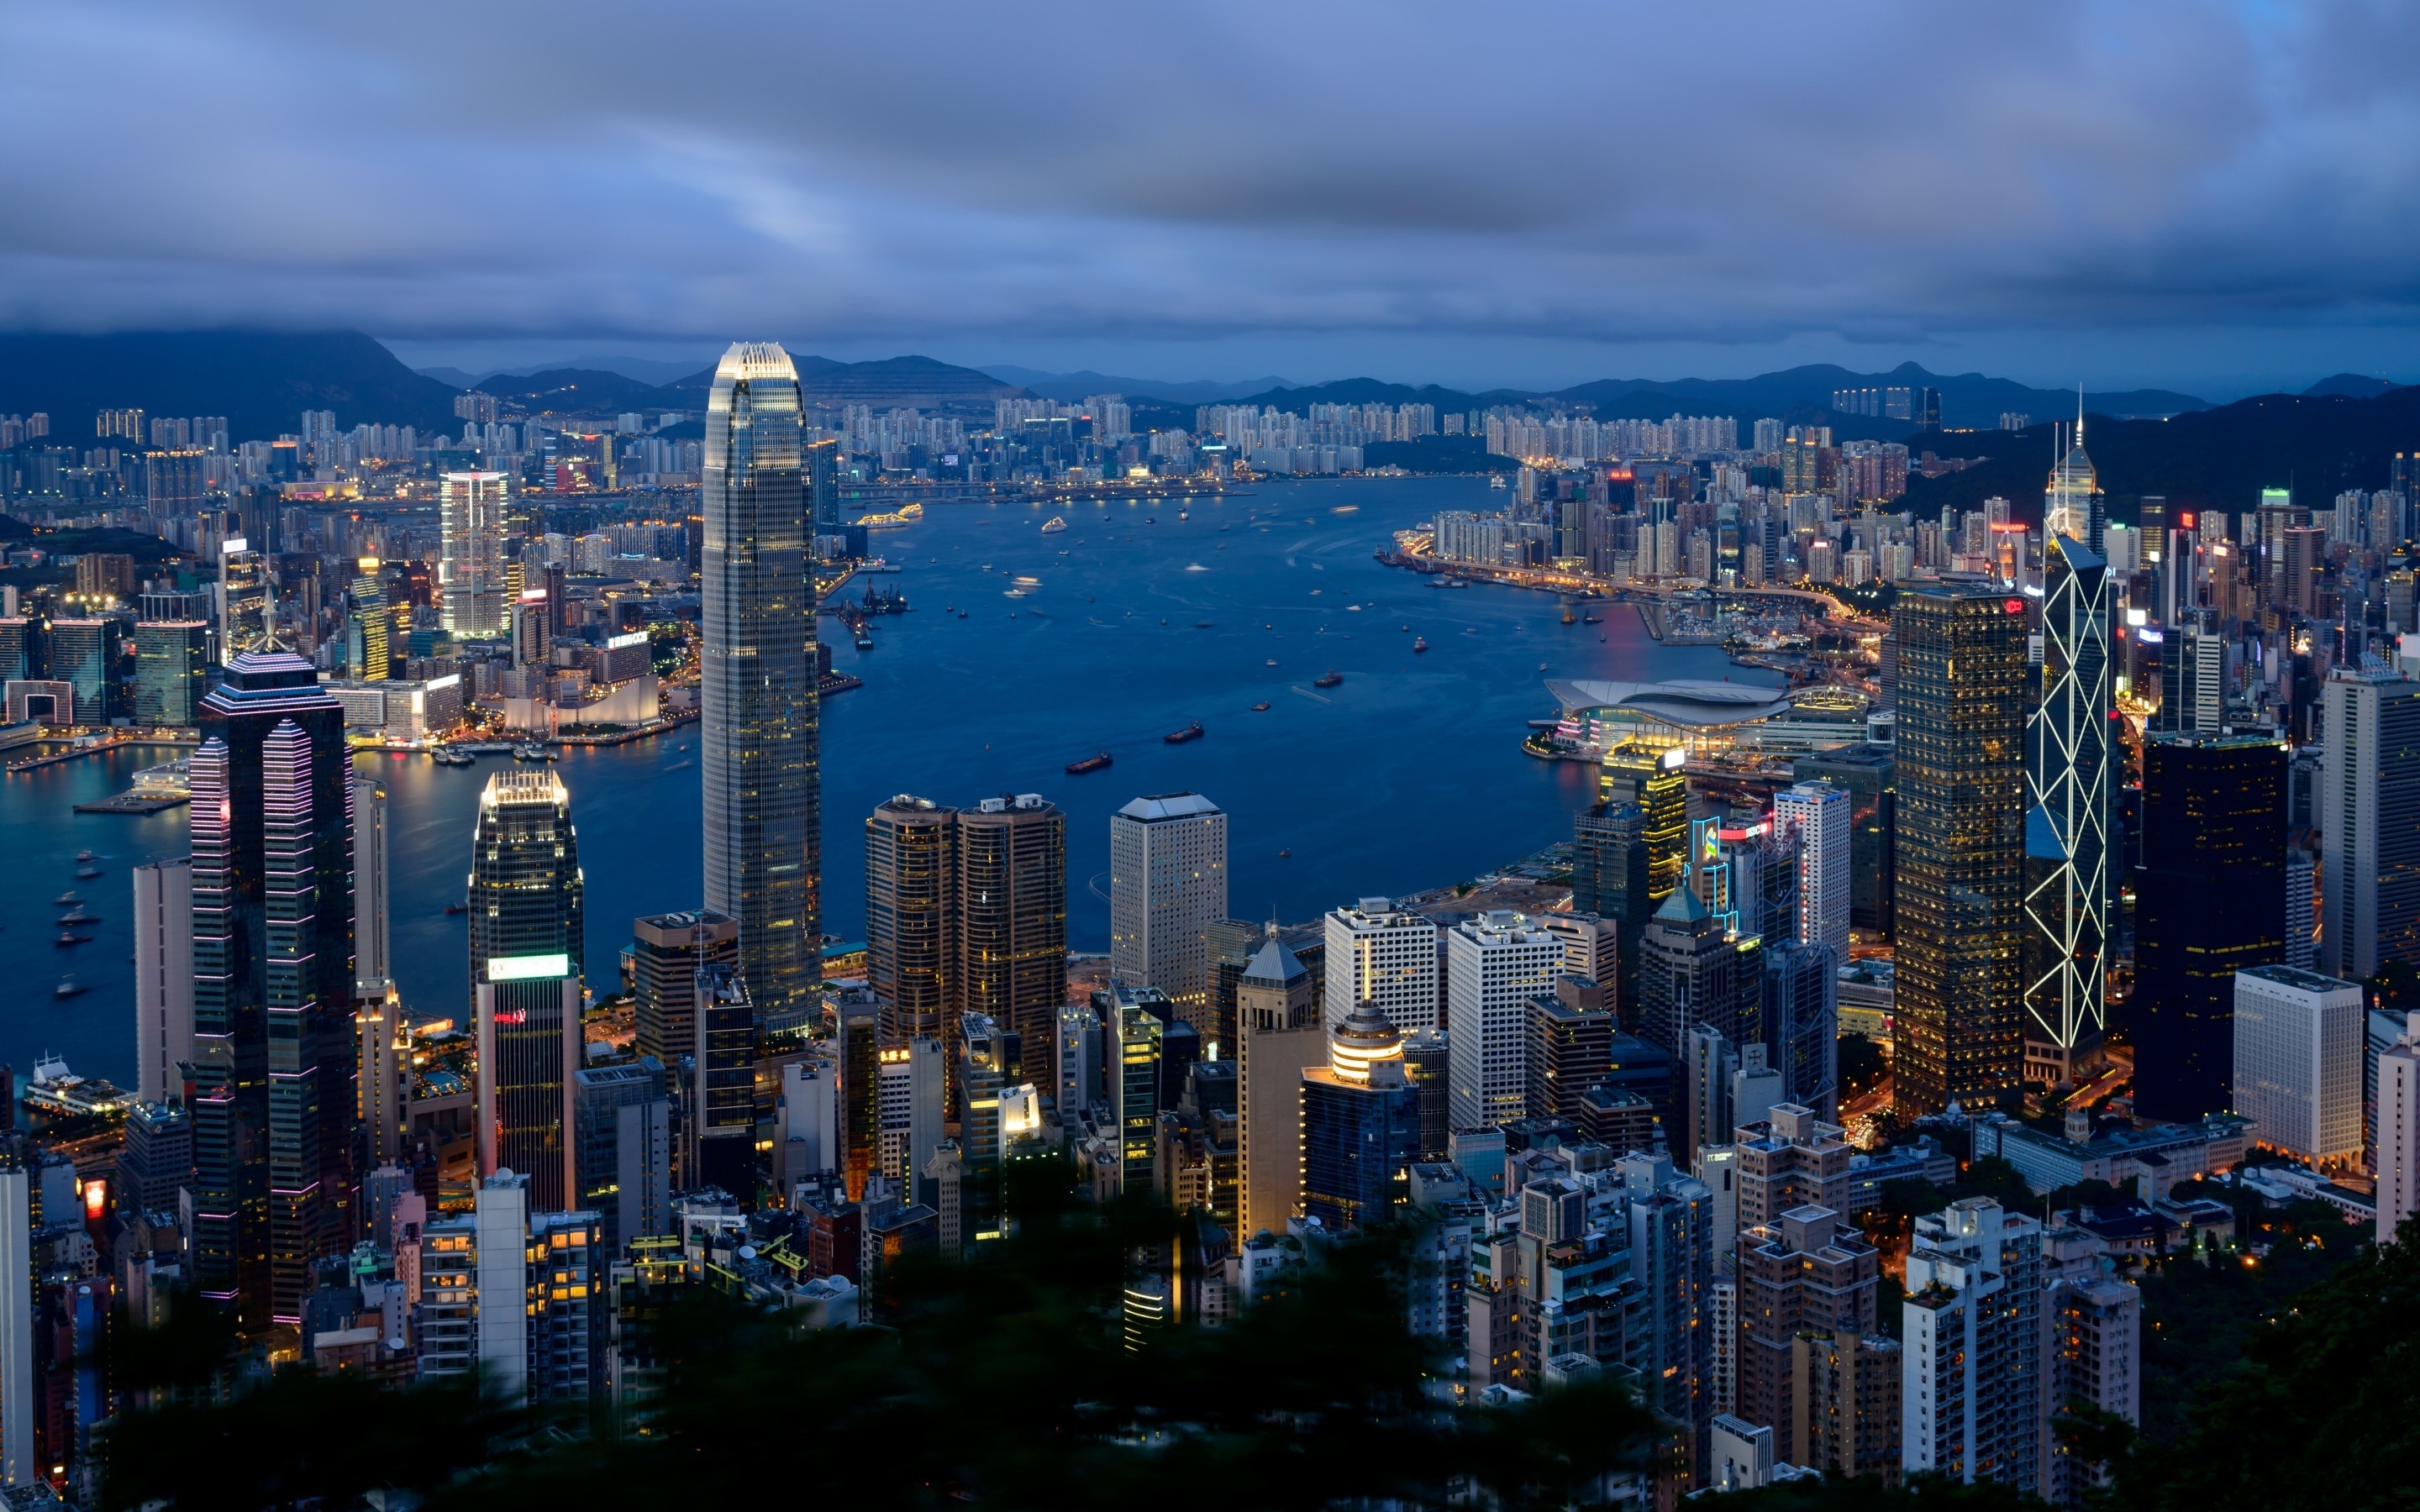 Hong Kong City View for 2880 x 1800 Retina Display resolution